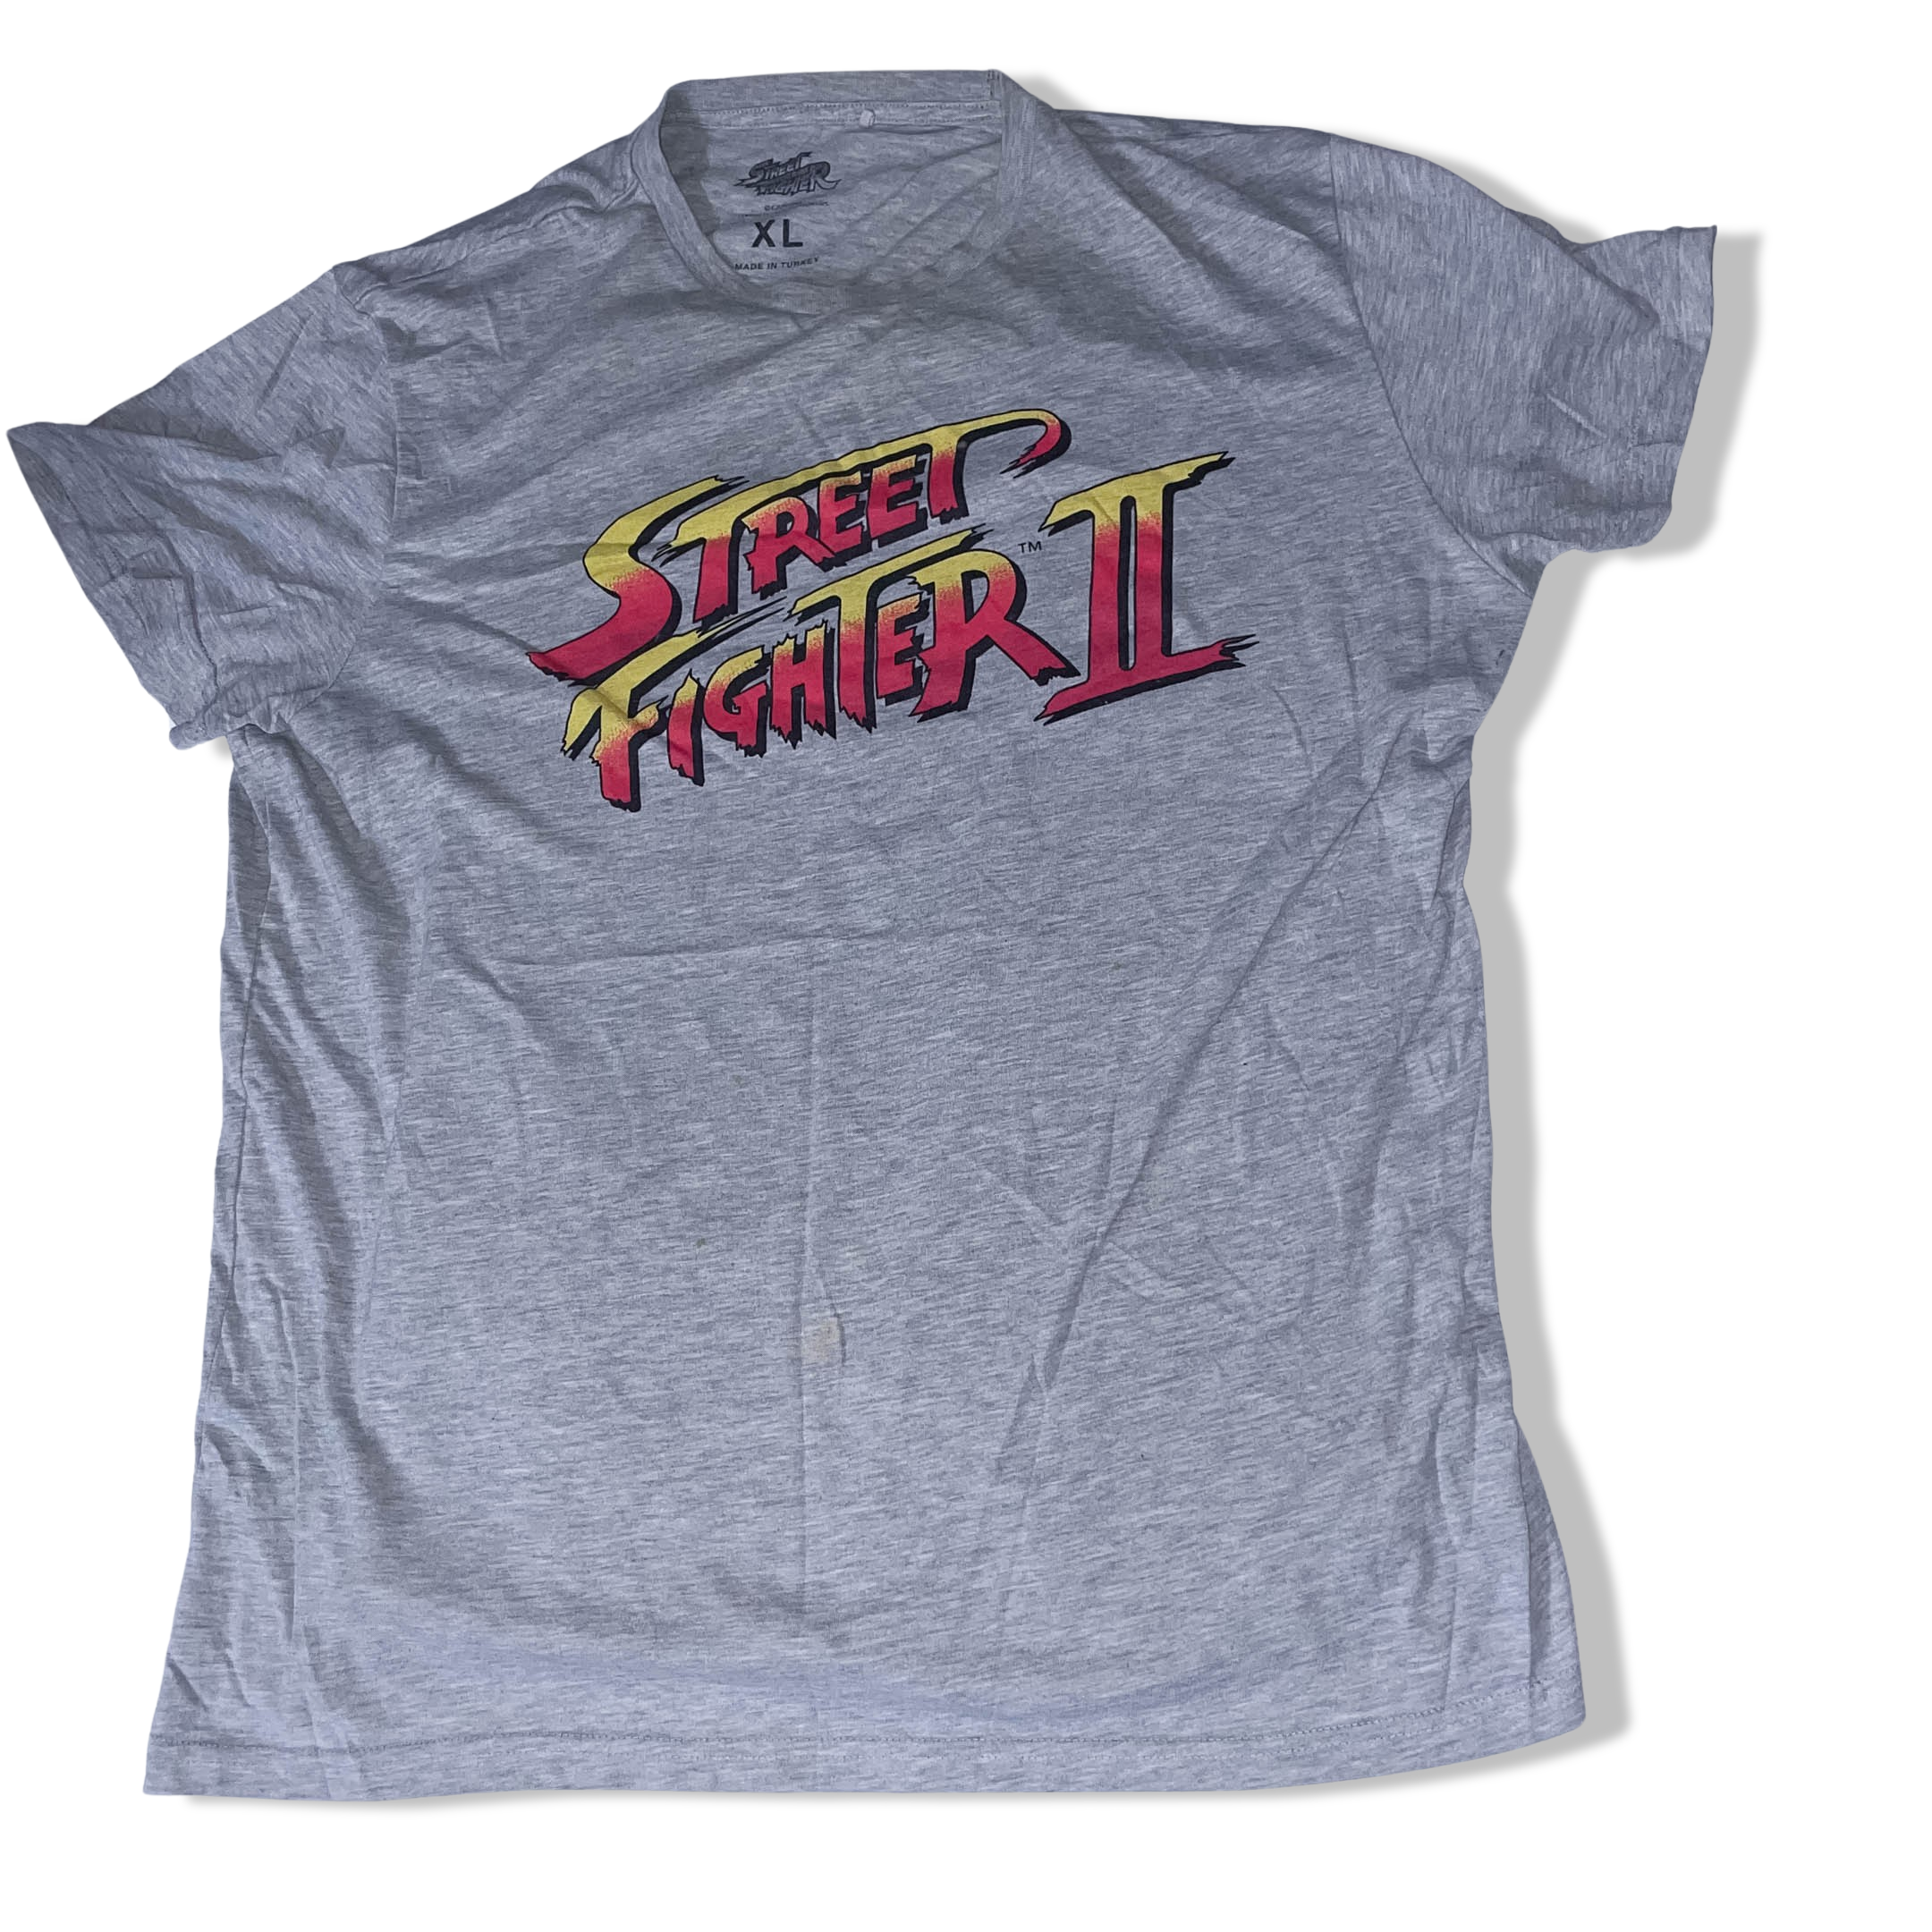 Vintage Street Fighter 2 grunge style logo grey XL tees